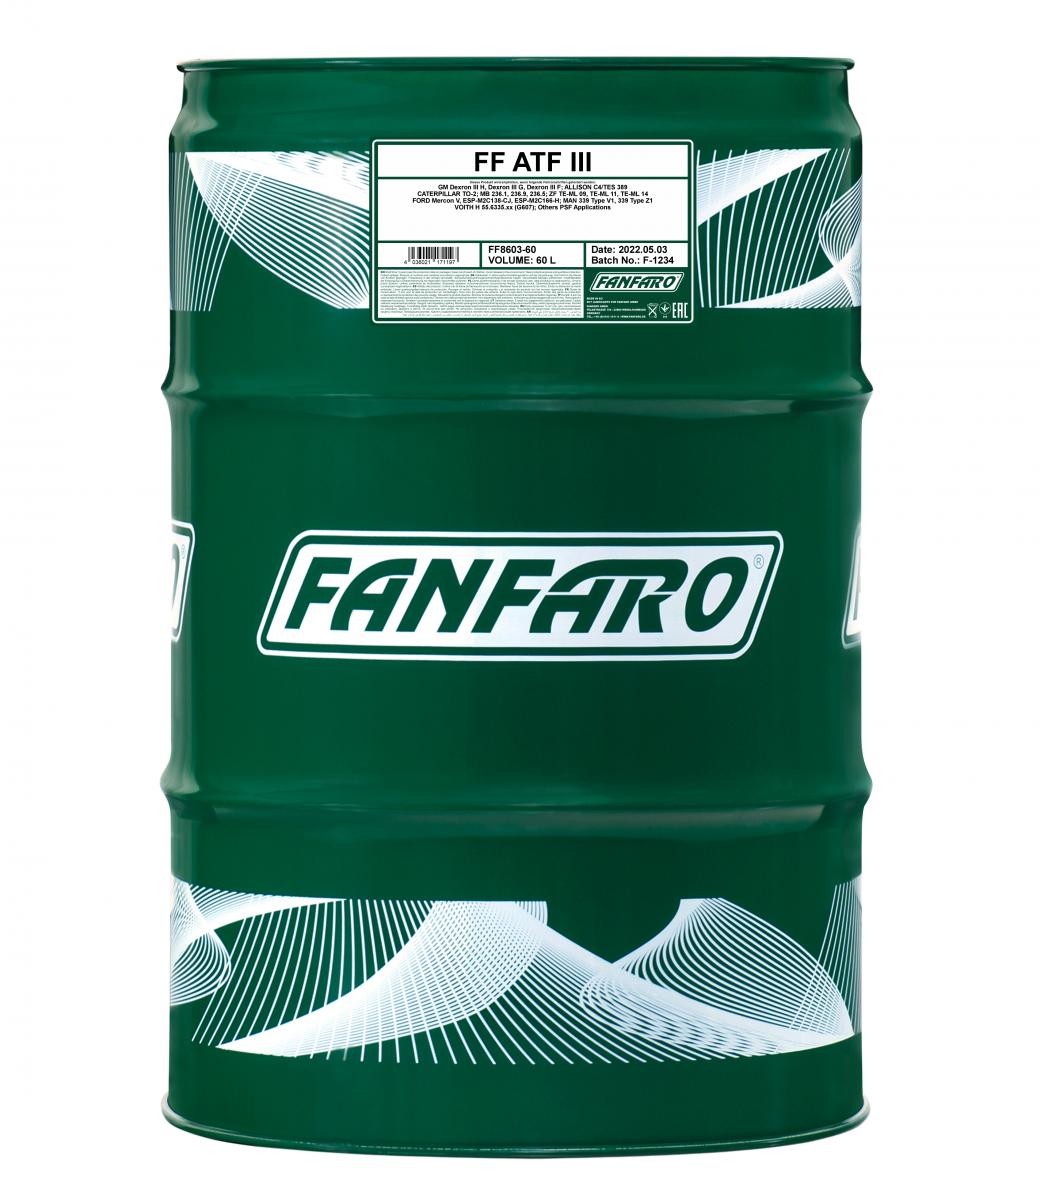 FF8603-60 FANFARO Automatikgetriebeöl VOLVO FL 6